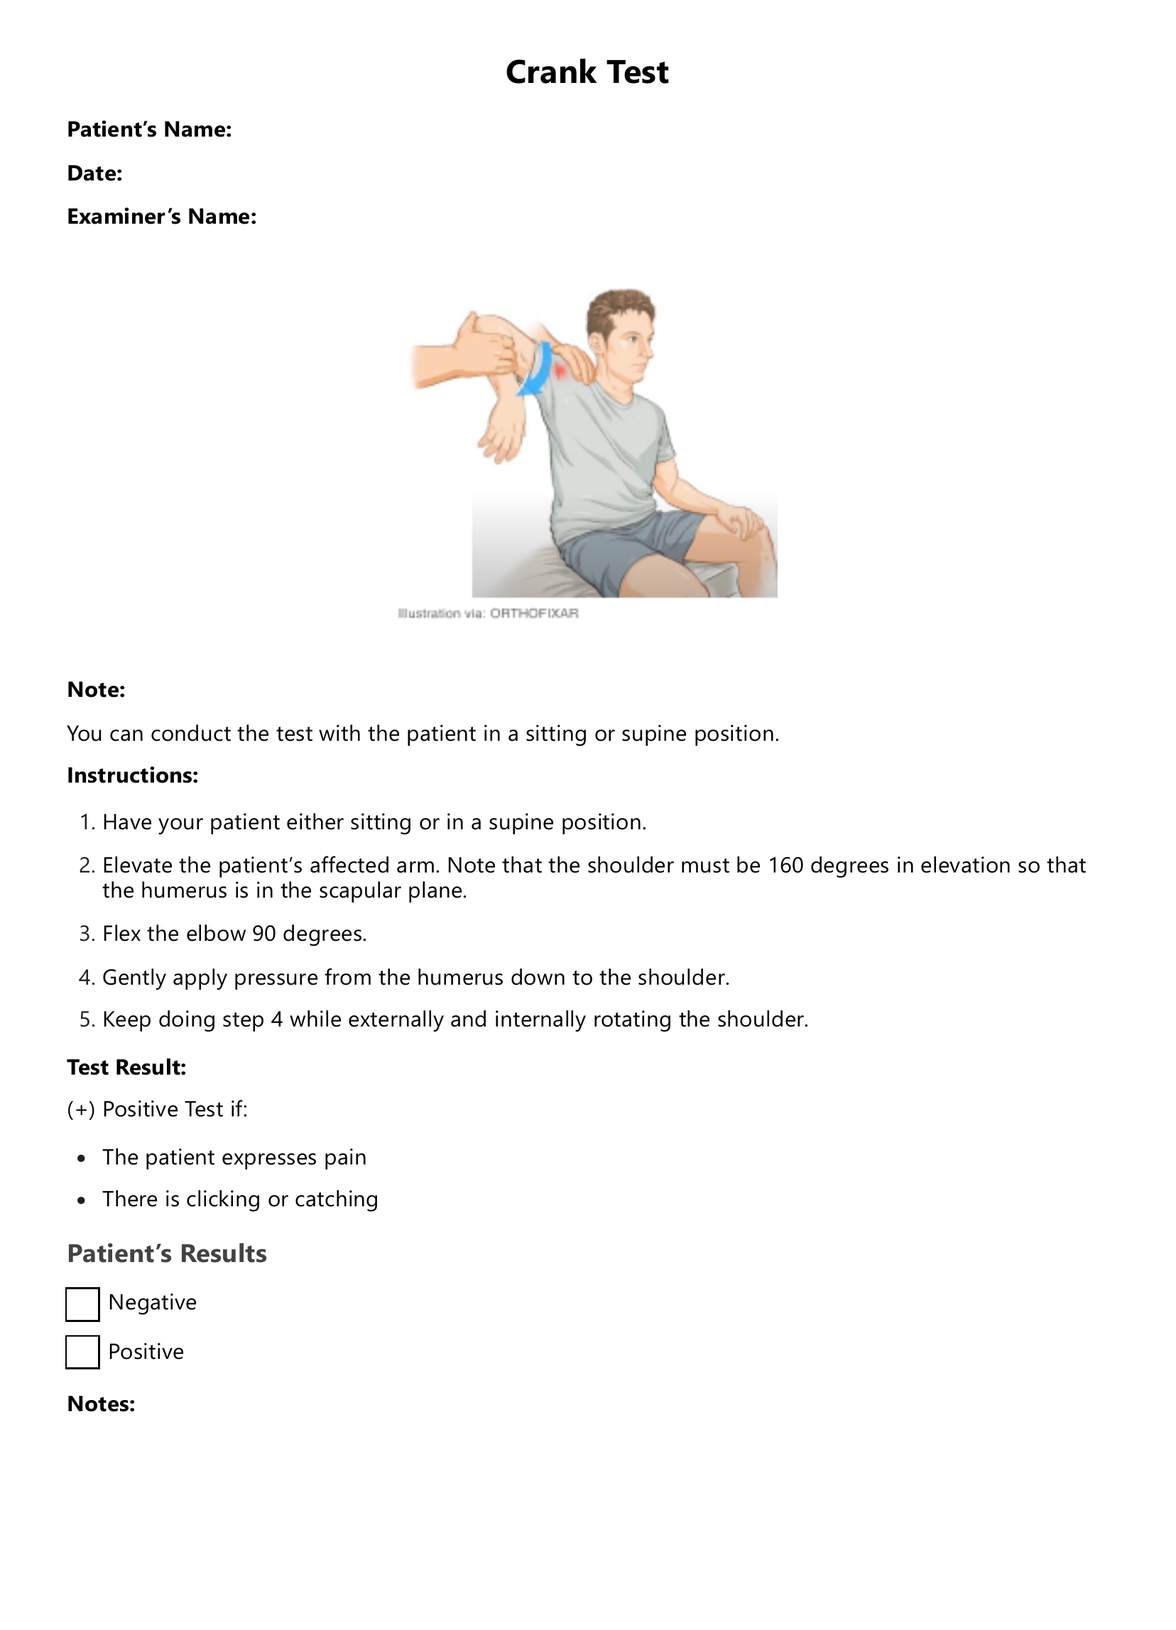 Crank Tests PDF Example